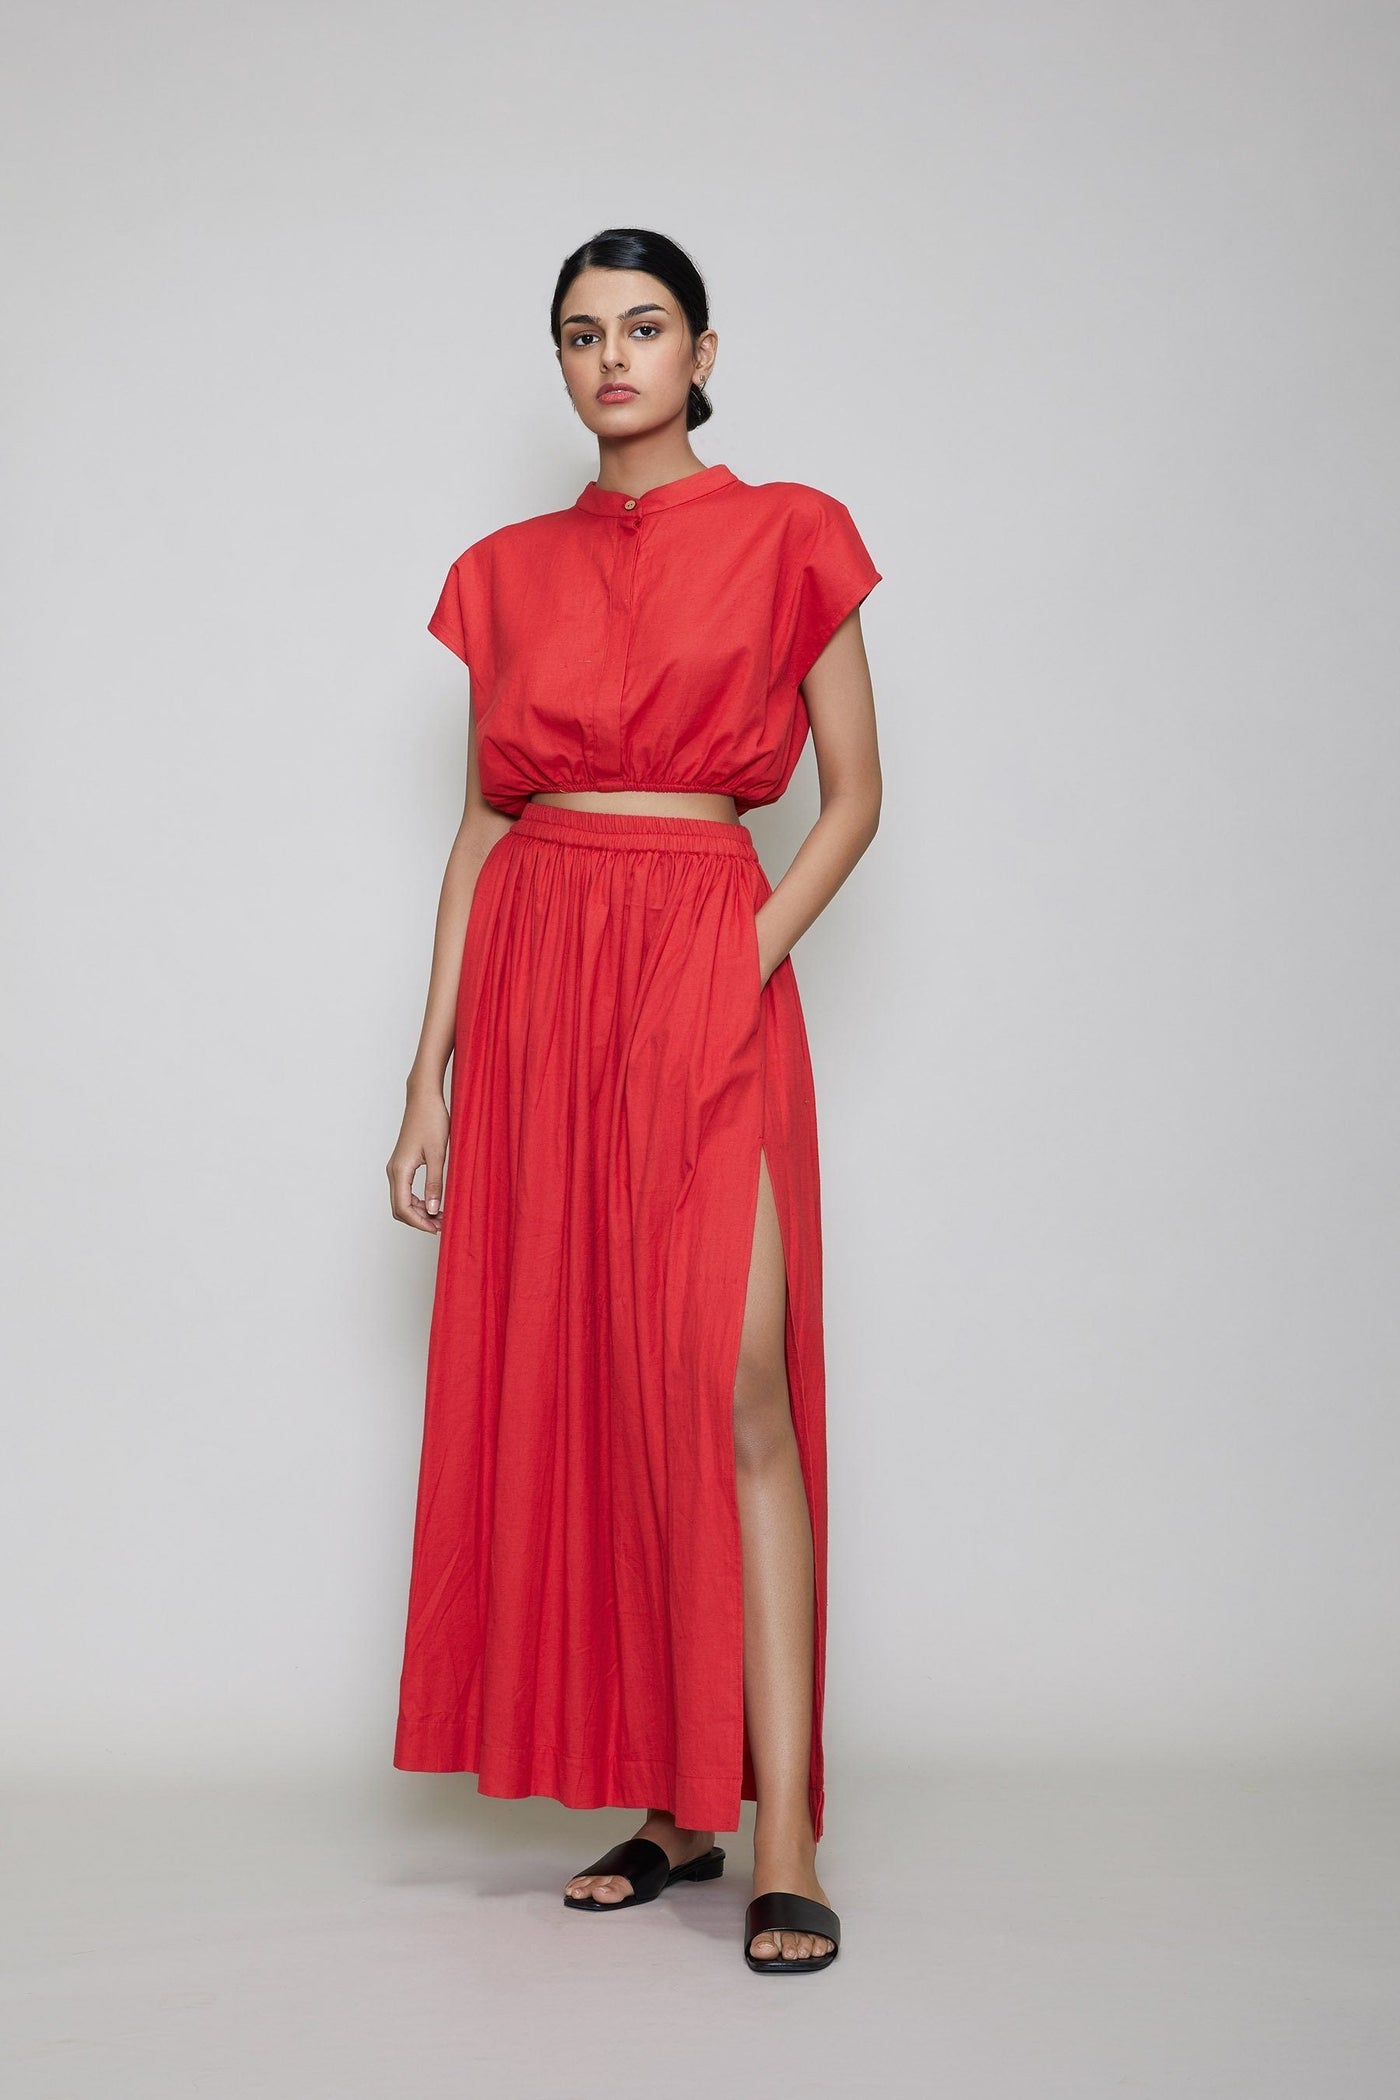 MATI SL SKIRT - RED Fashion Mati